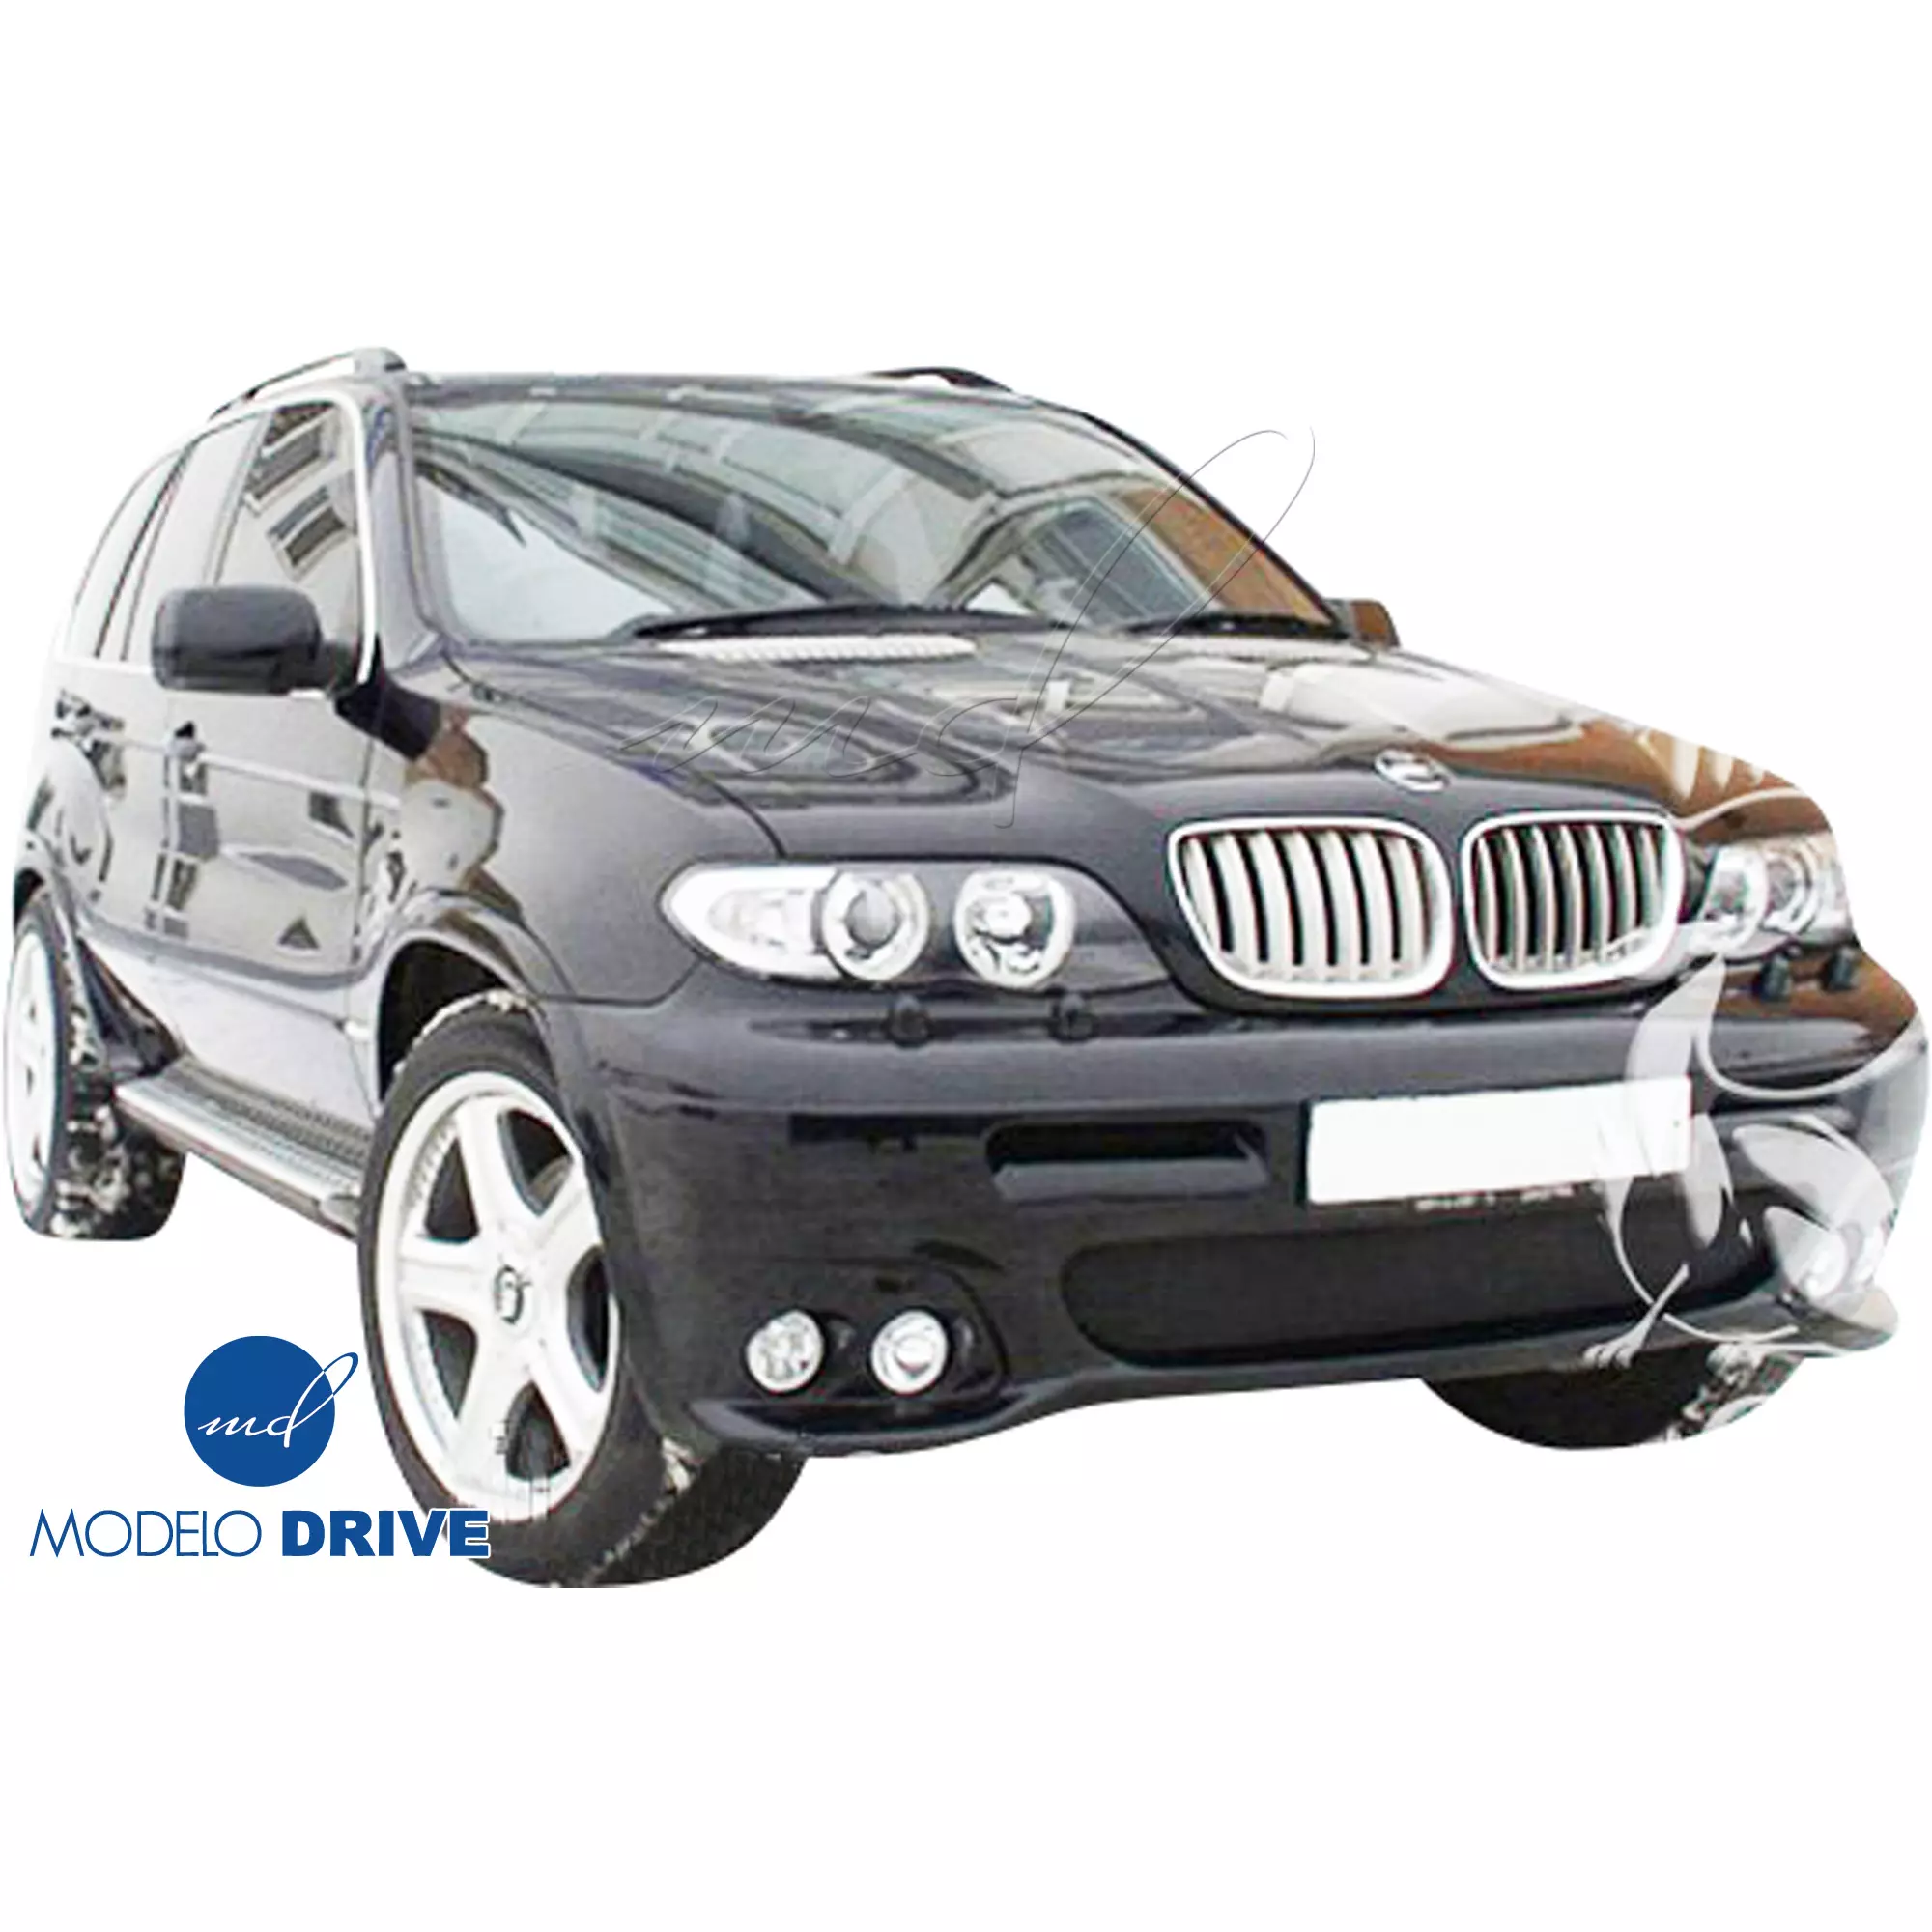 ModeloDrive FRP HAMA Front Bumper > BMW X5 E53 2000-2006 > 5dr - Image 9